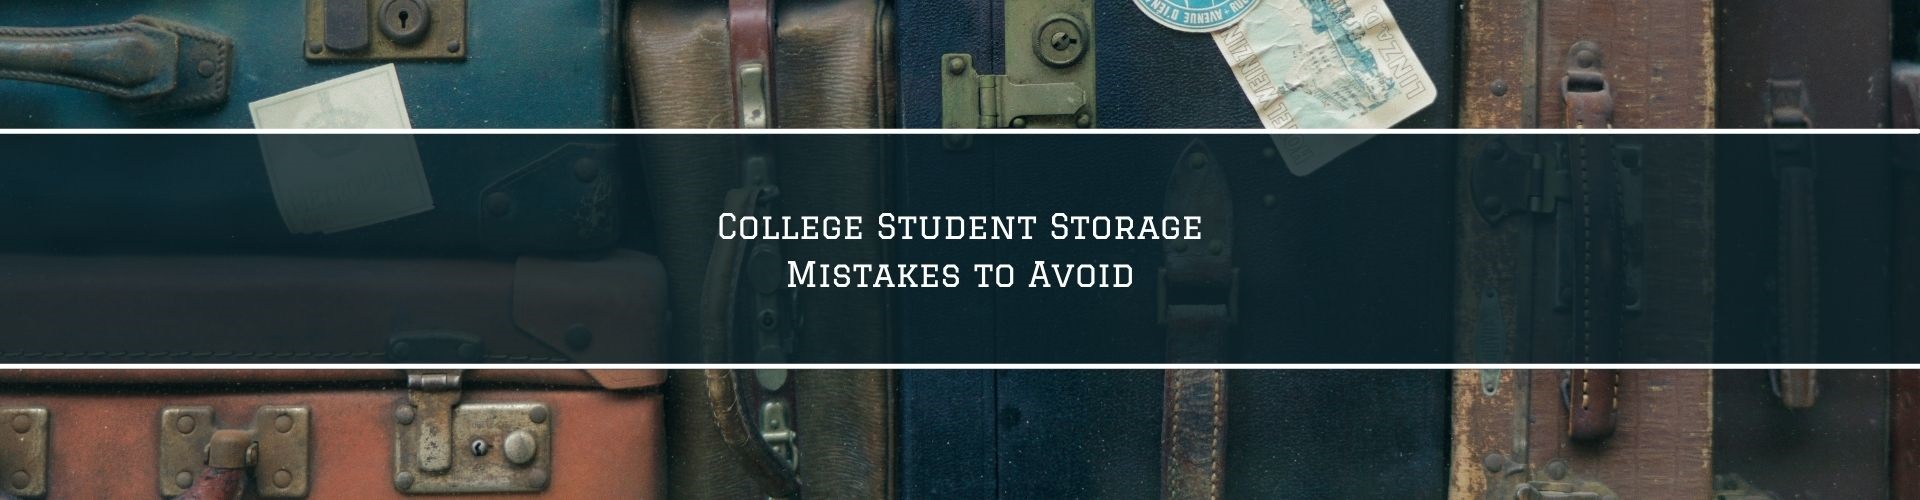 college student storage